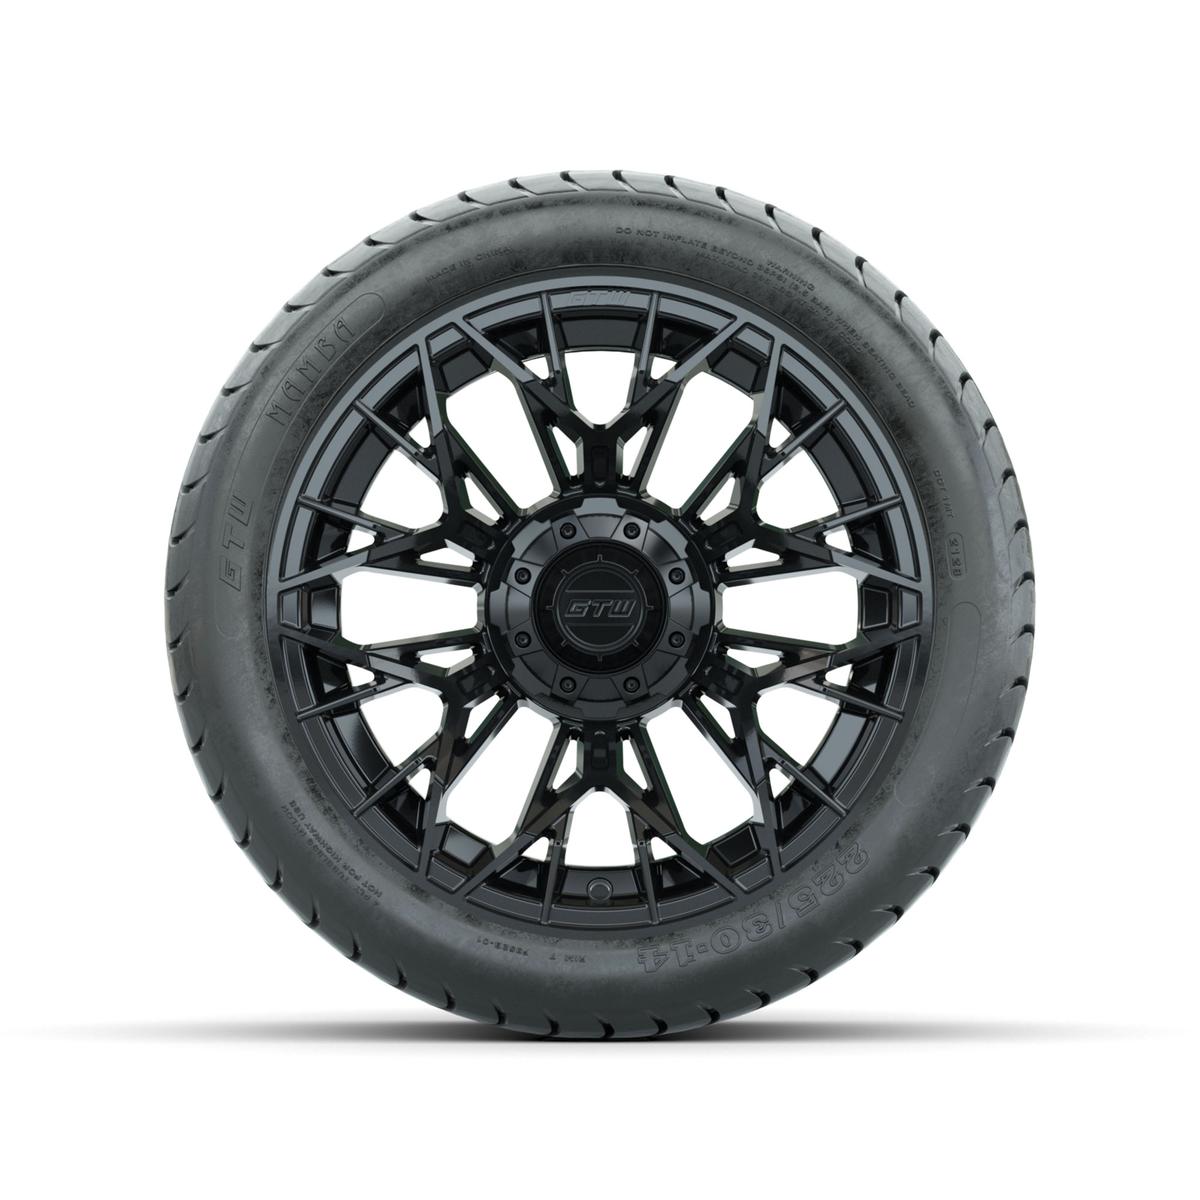 Set of (4) 14 in GTW® Stellar Black Wheels with 225/30-14 Mamba Street Tire